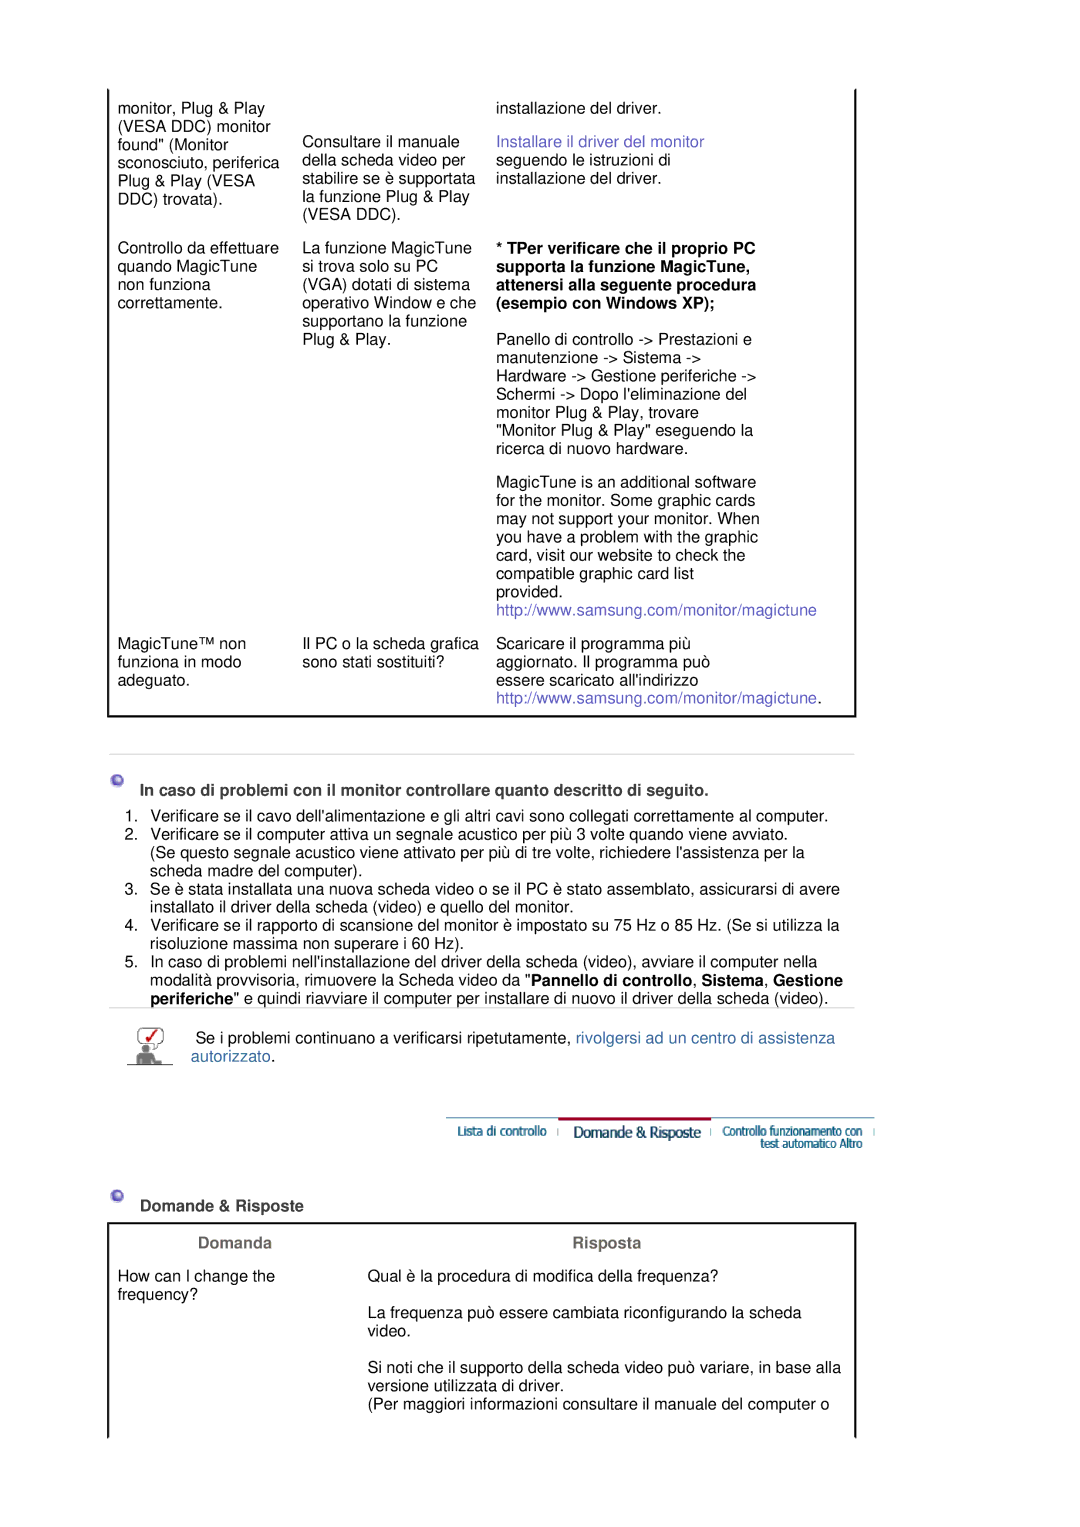 Samsung MJ17CSKS/EDC manual Domande & Risposte, Domanda, Risposta 